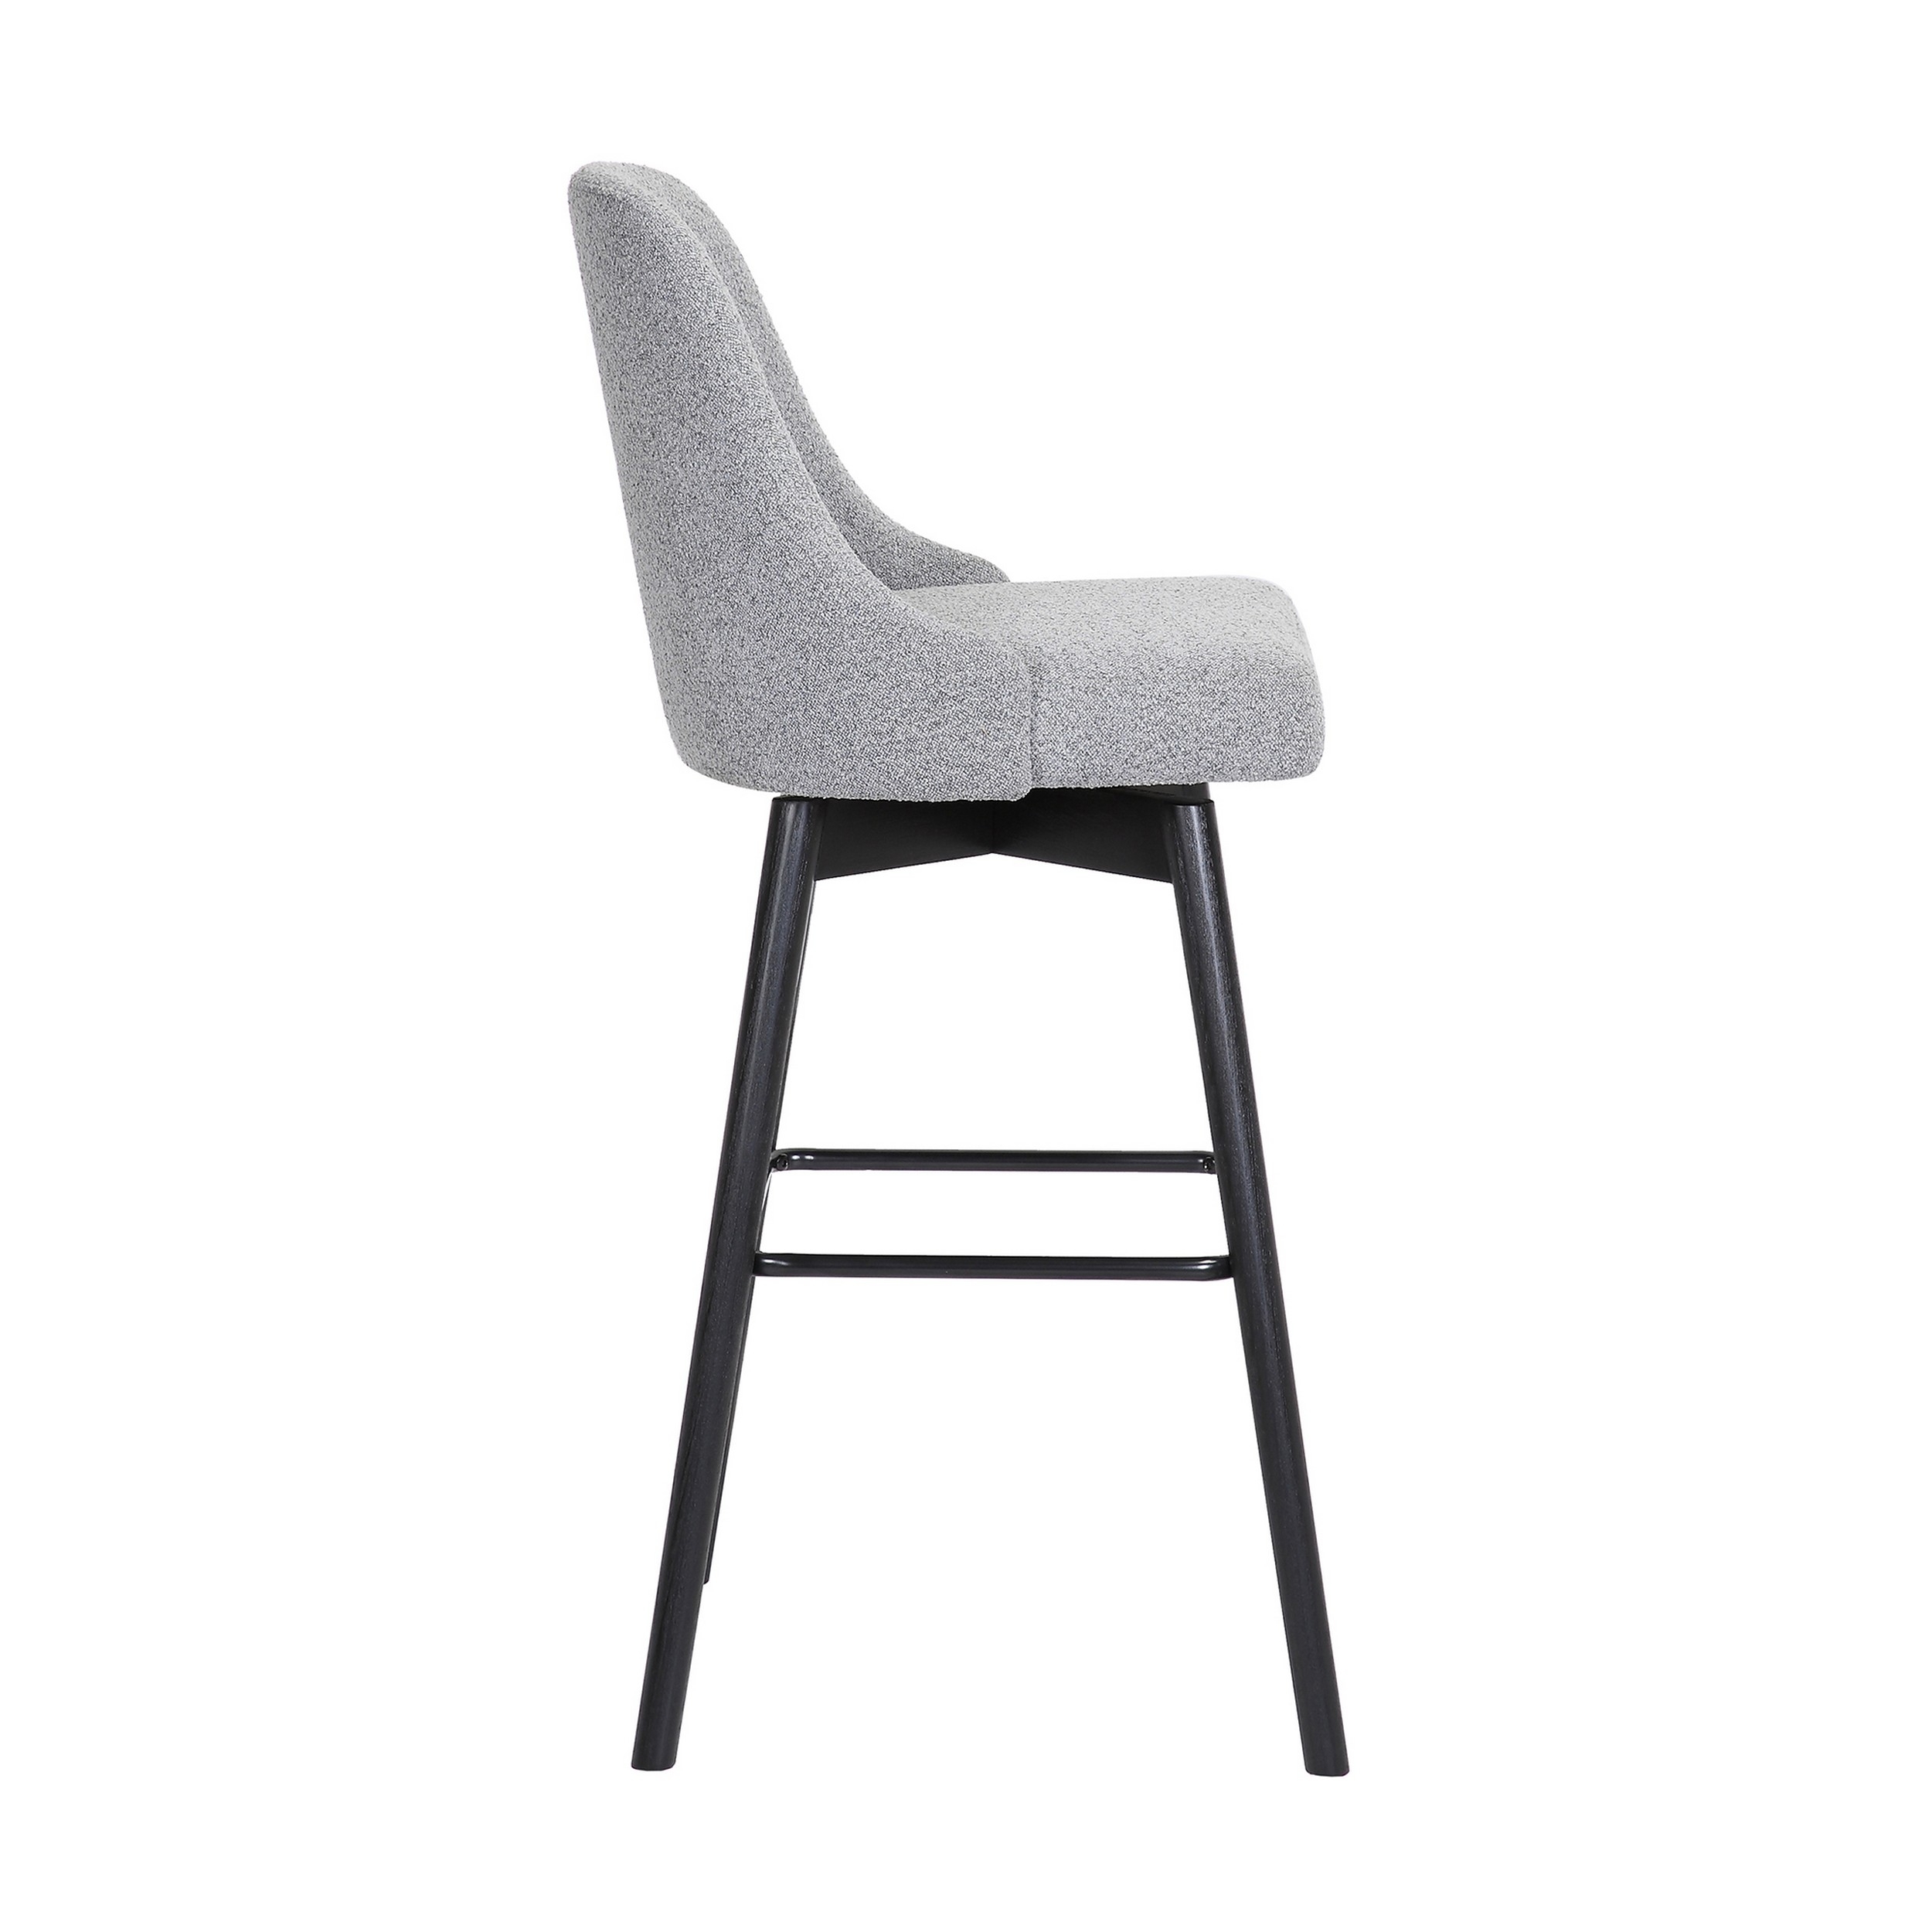 Sean 26 Inch Counter Stool Chair, Parson Style, Swivel, Light Gray Fabric - Saltoro Sherpi